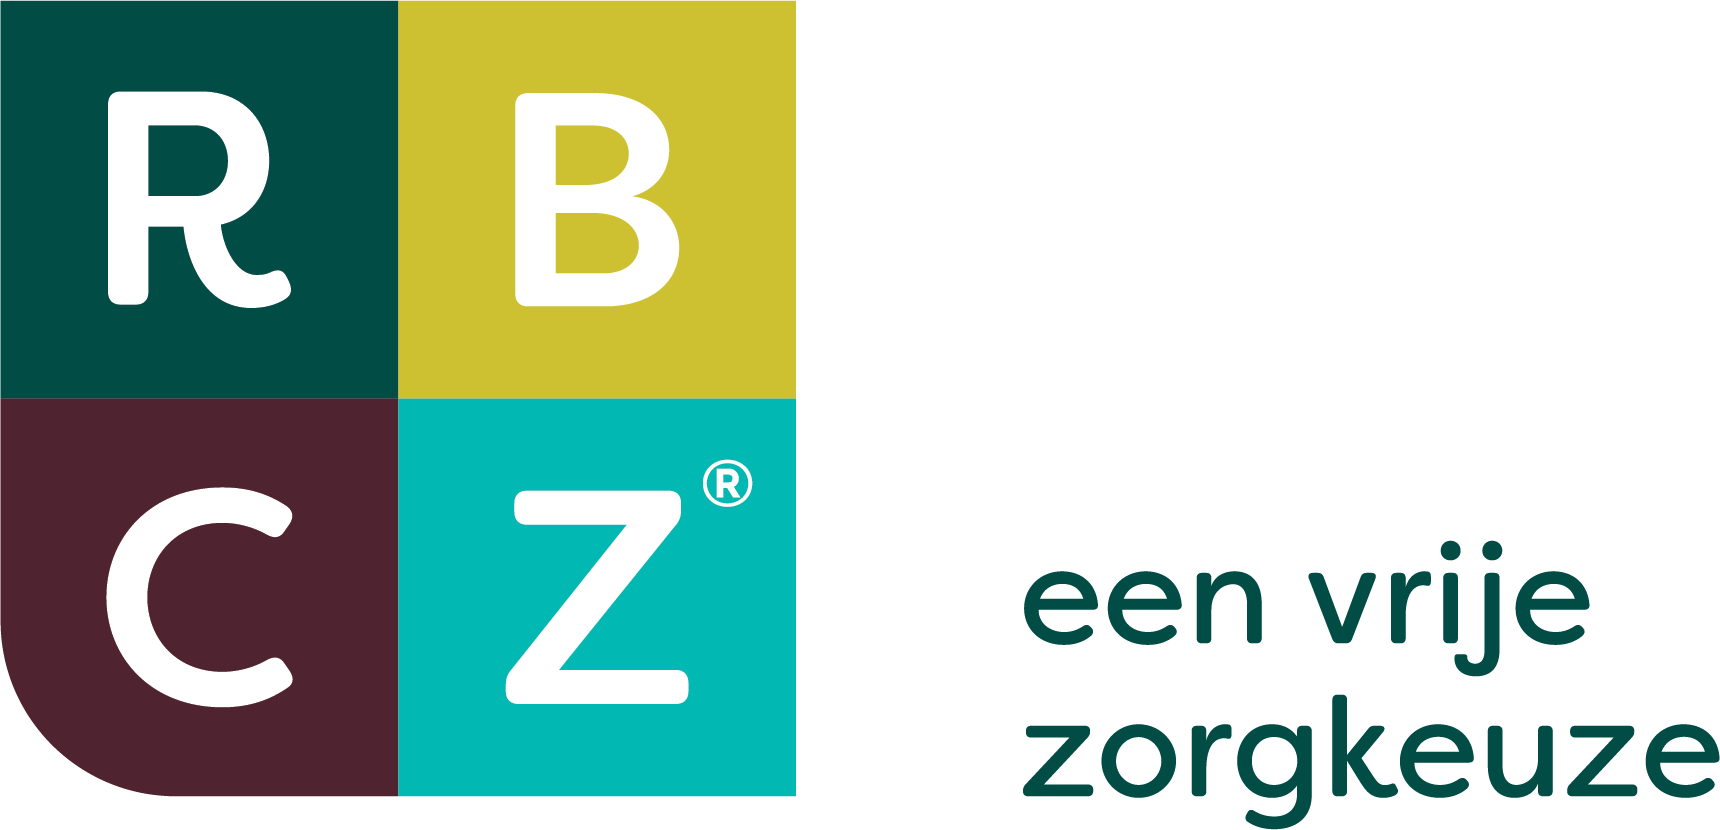 RBCZ logo_CMYK_payoff